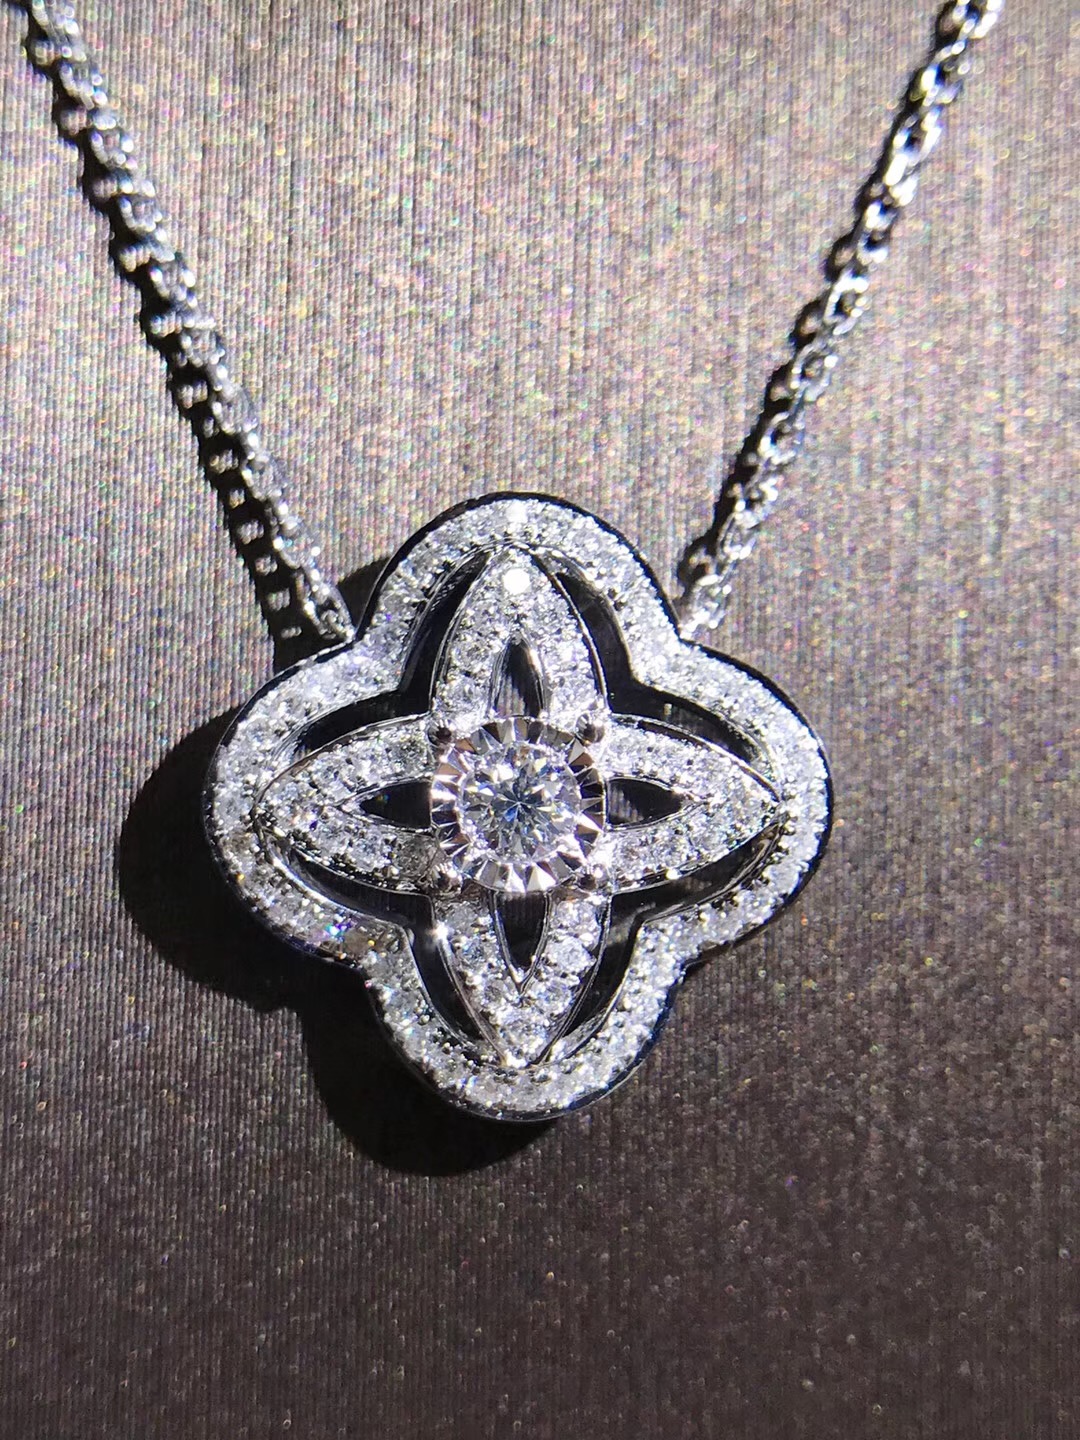 N00375 Flower Shaped Diamond Necklace in 18k White Gold/18k Gold